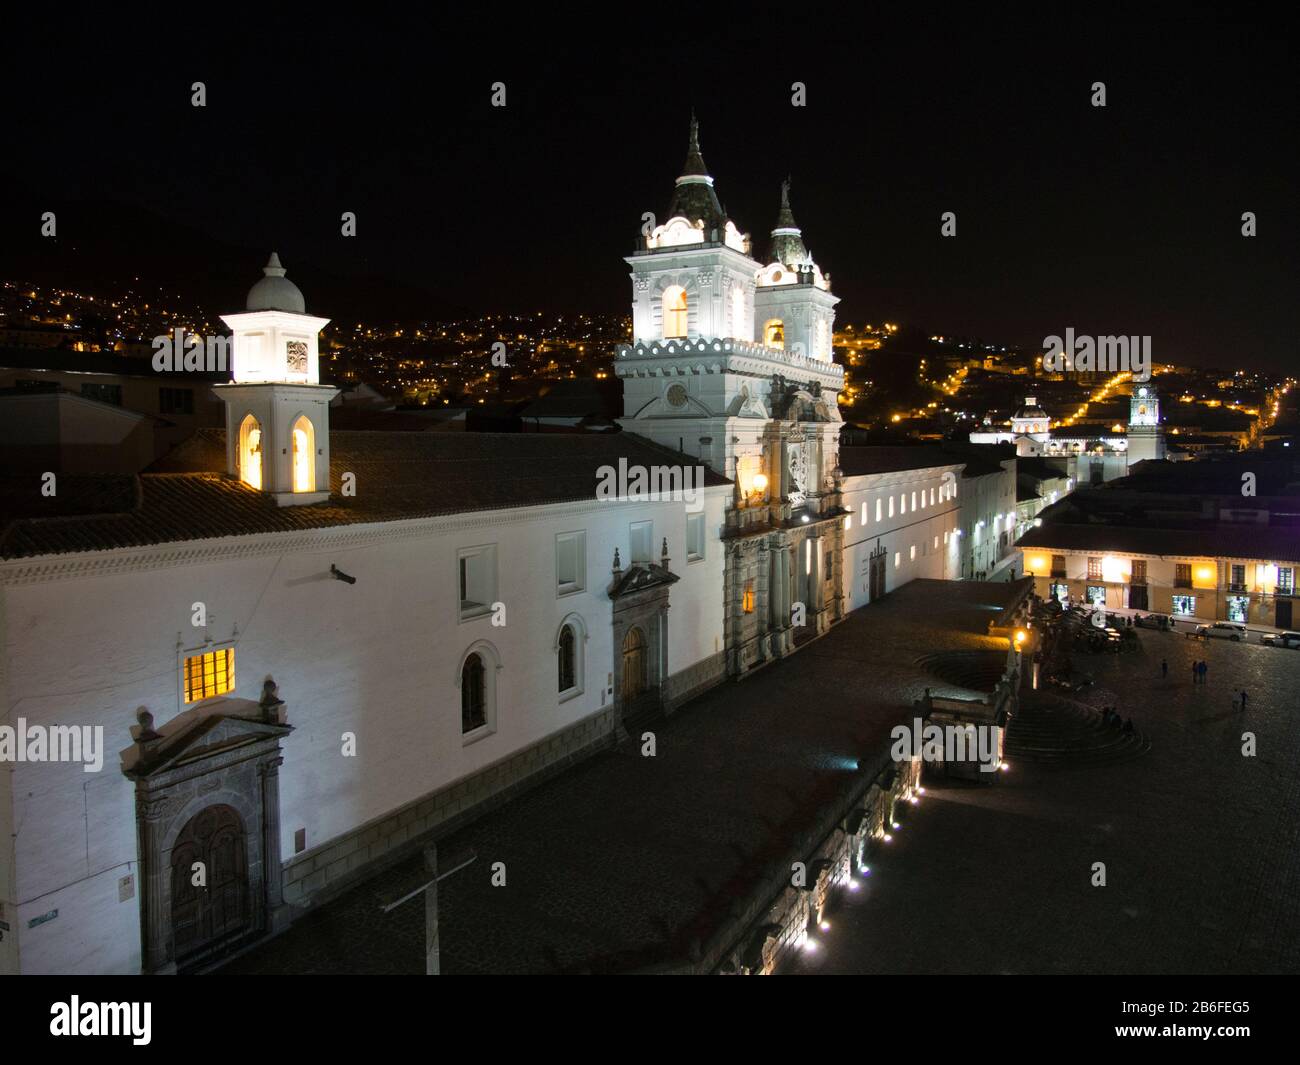 Convento de San Francisco la nuit, Casa Gangotena, Quito, Équateur Banque D'Images